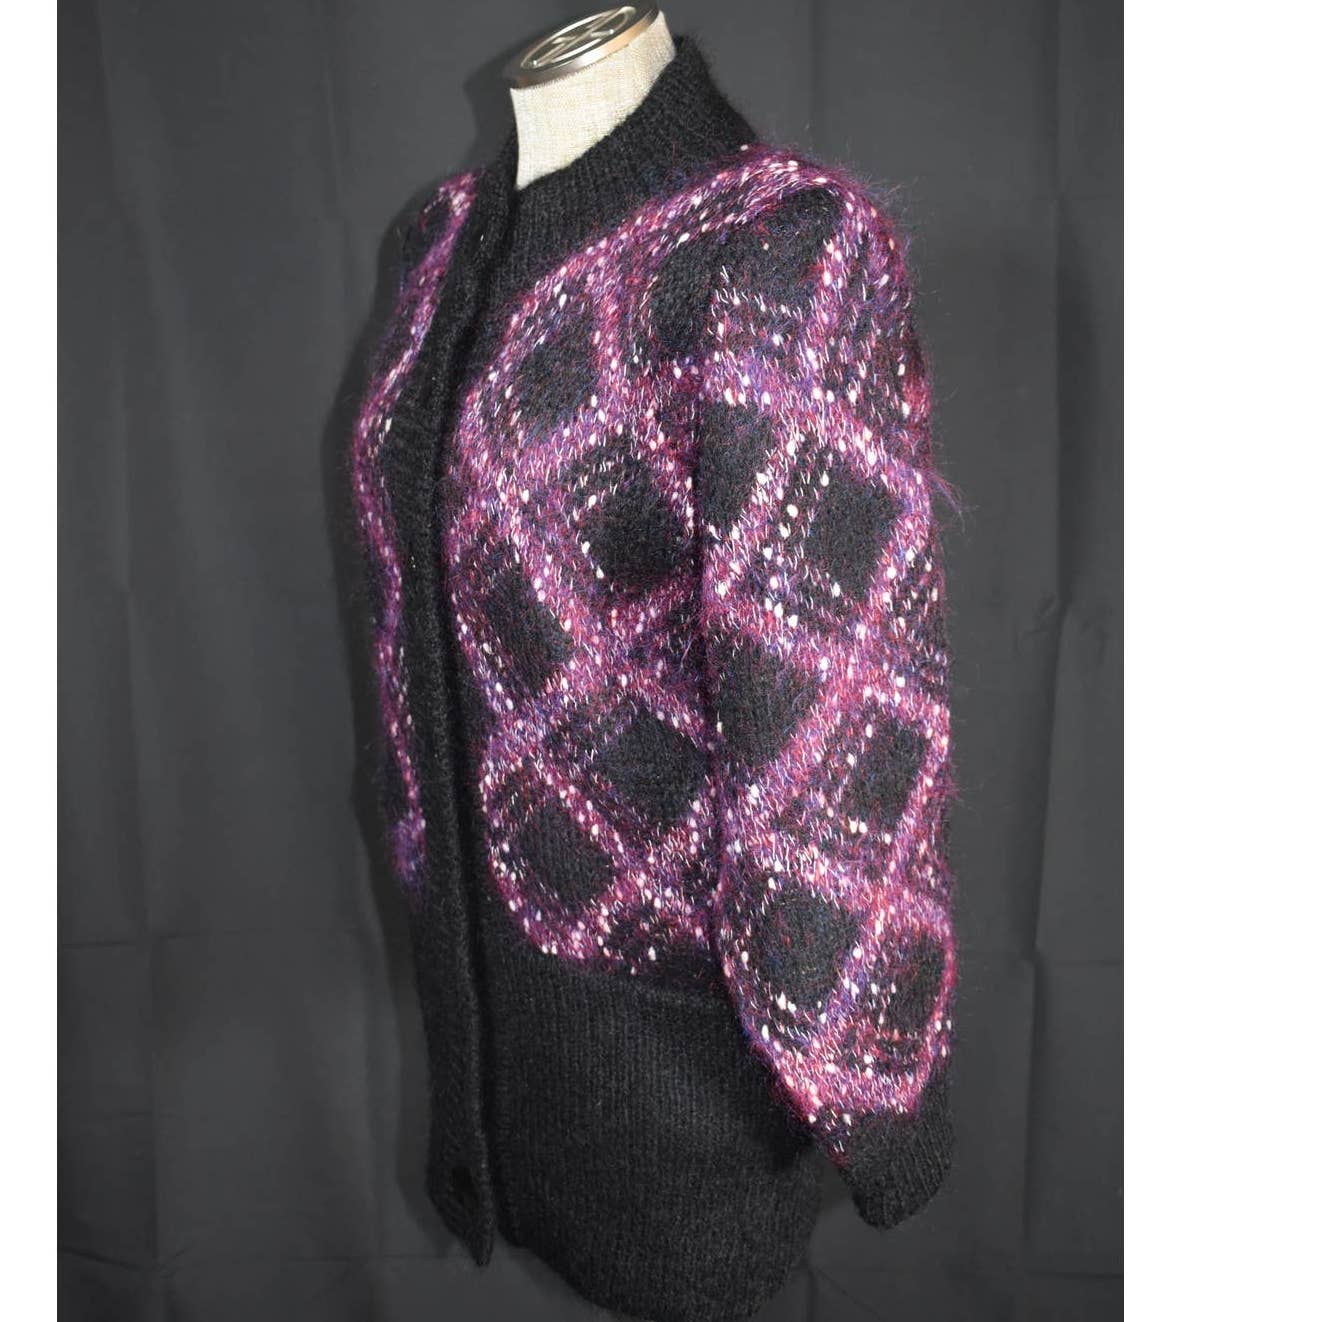 Vintage Rinomata Japanese Mohair Black Purple Cardigan Sweater - M